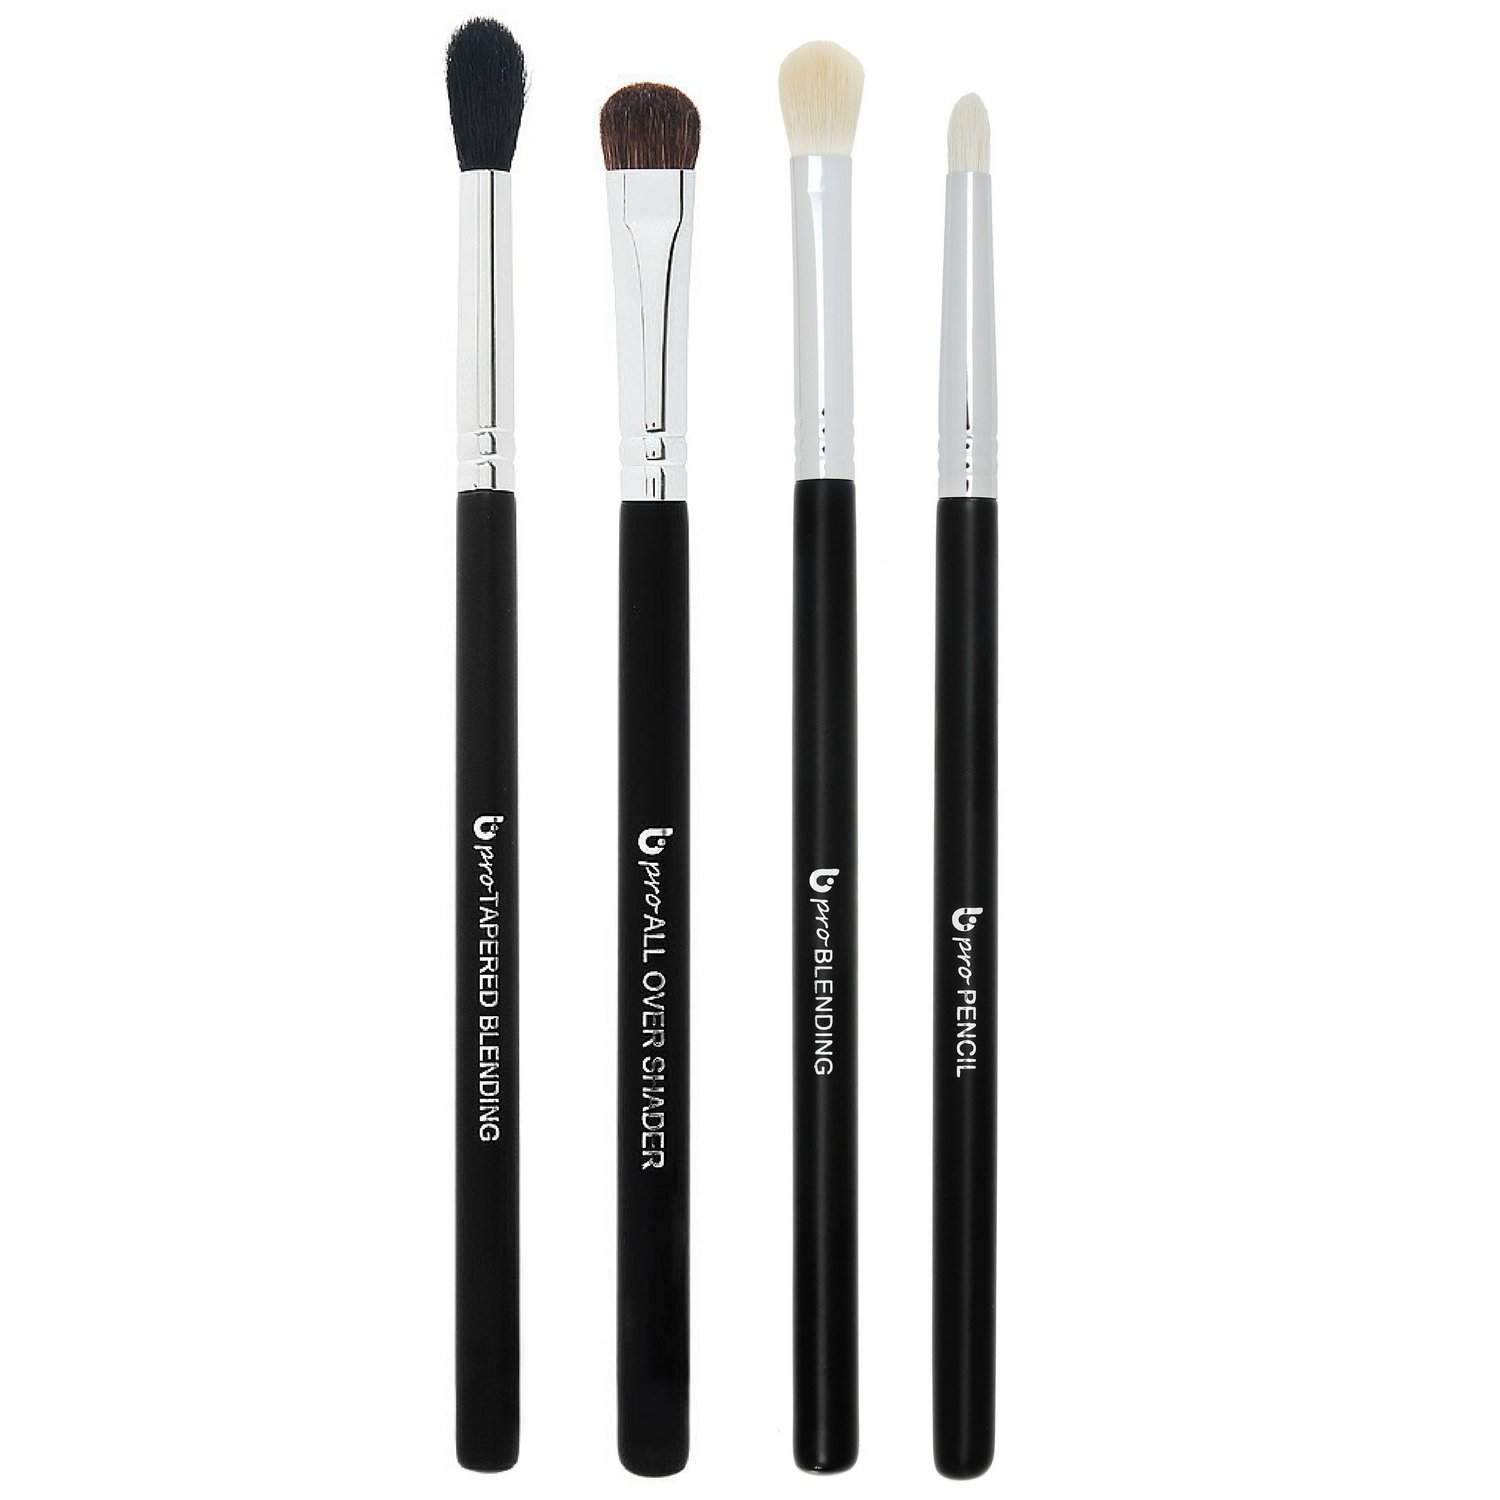 Buy the 5 Piece Basic Eye Brush Set by Beauty Junkees